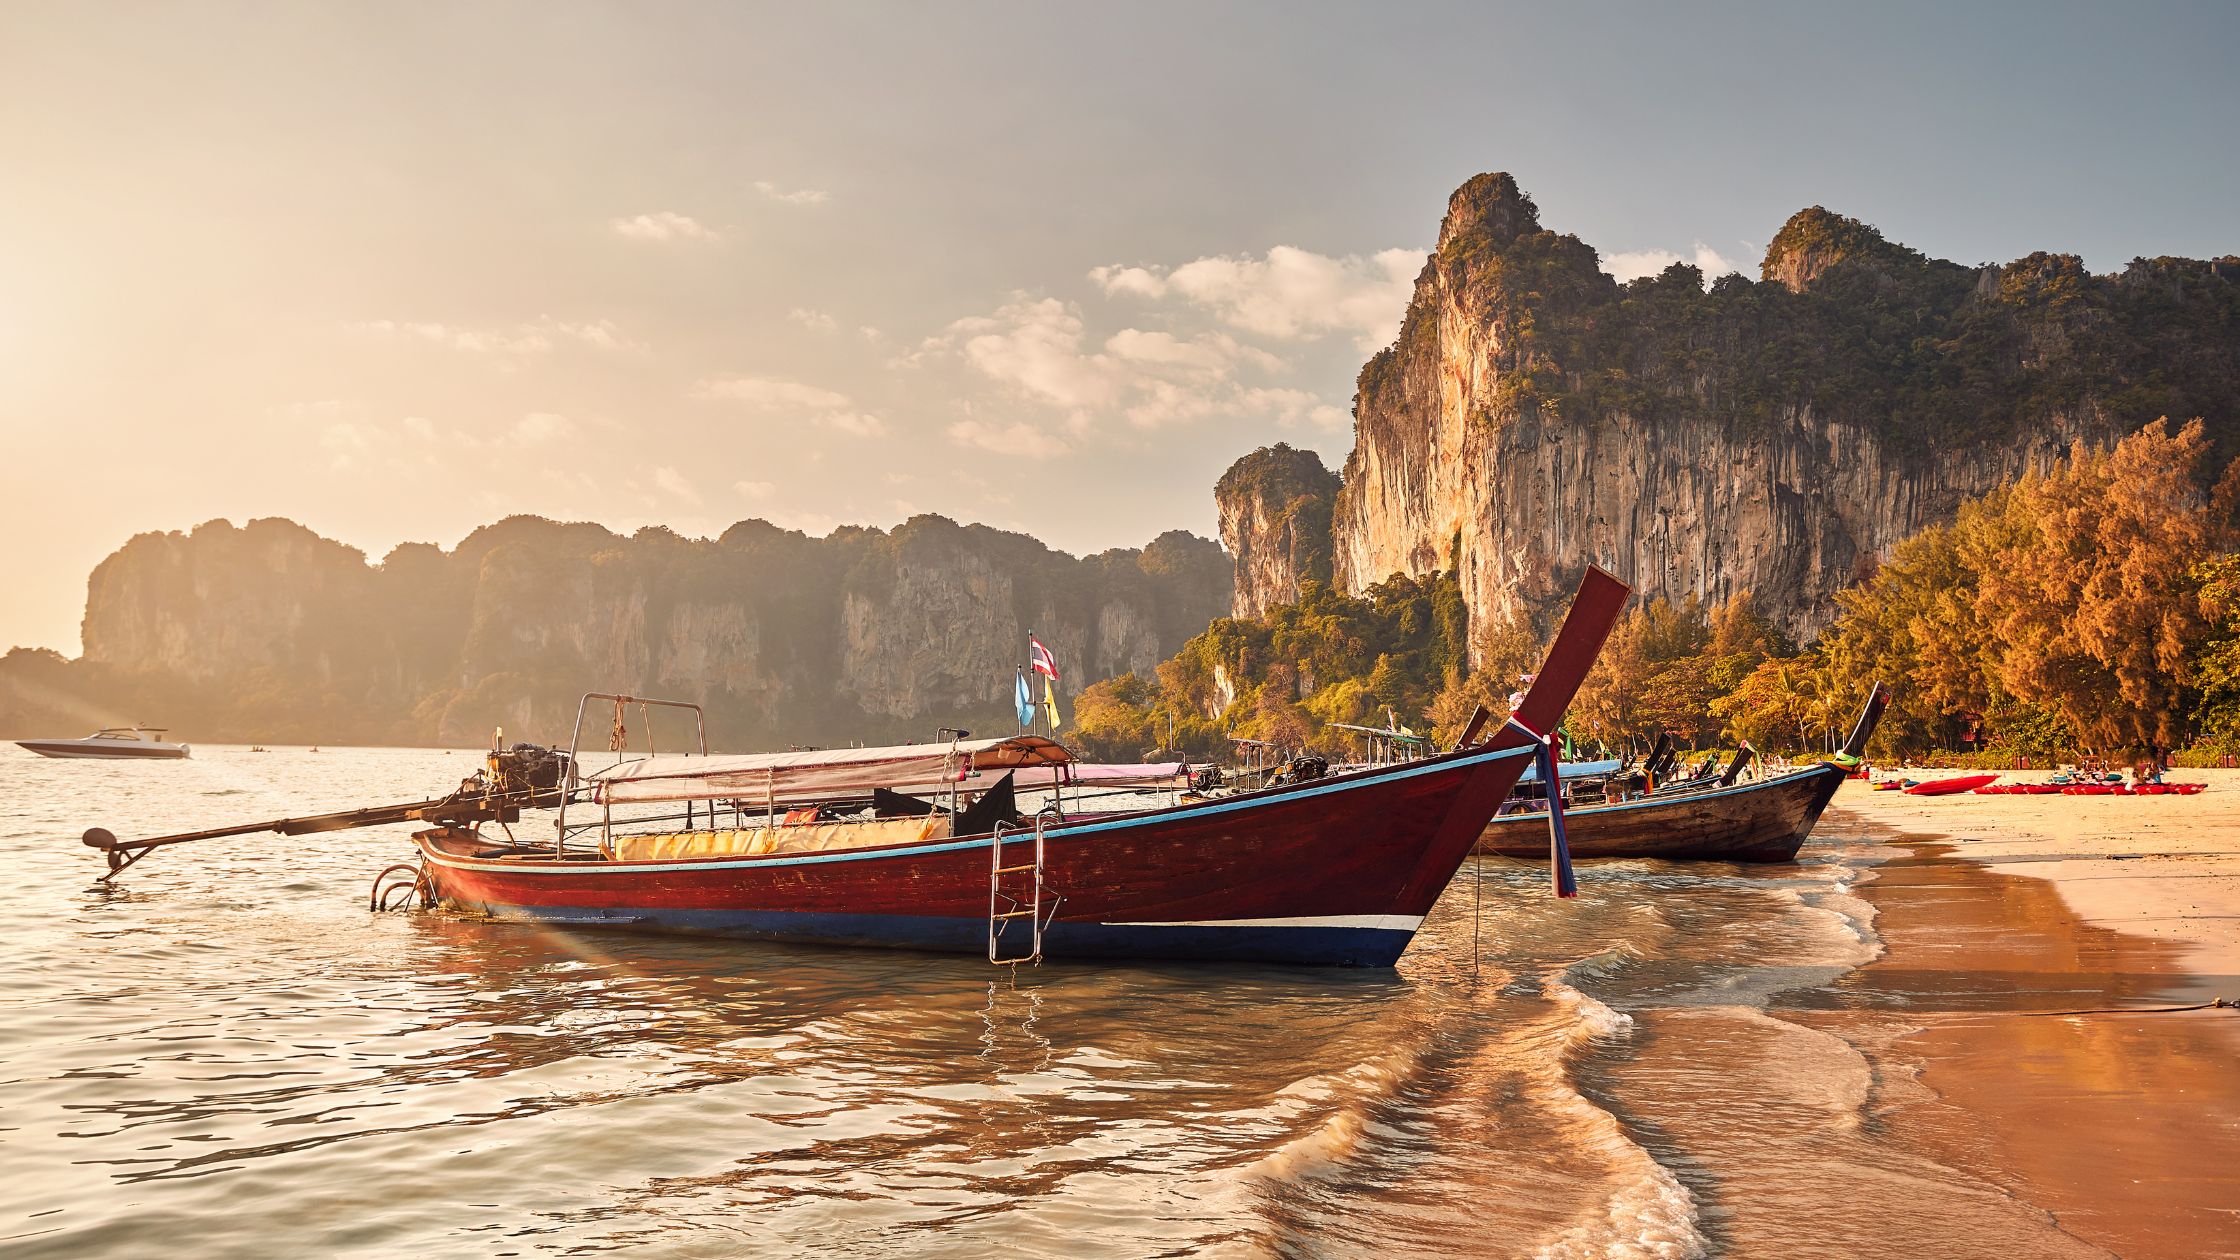 Boats in Krabi, Thailand.